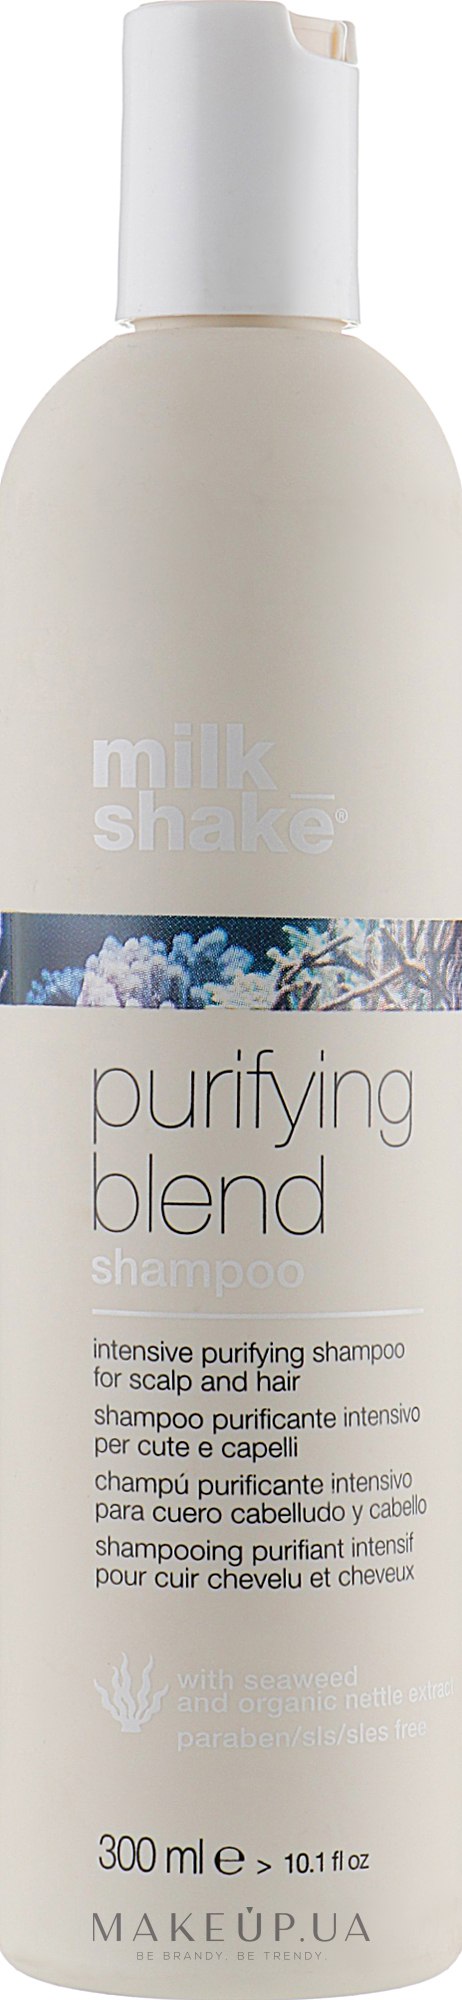 Интенсивный очищающий шампунь от перхоти - Milk Shake Purifying Blend Shampoo — фото 300ml